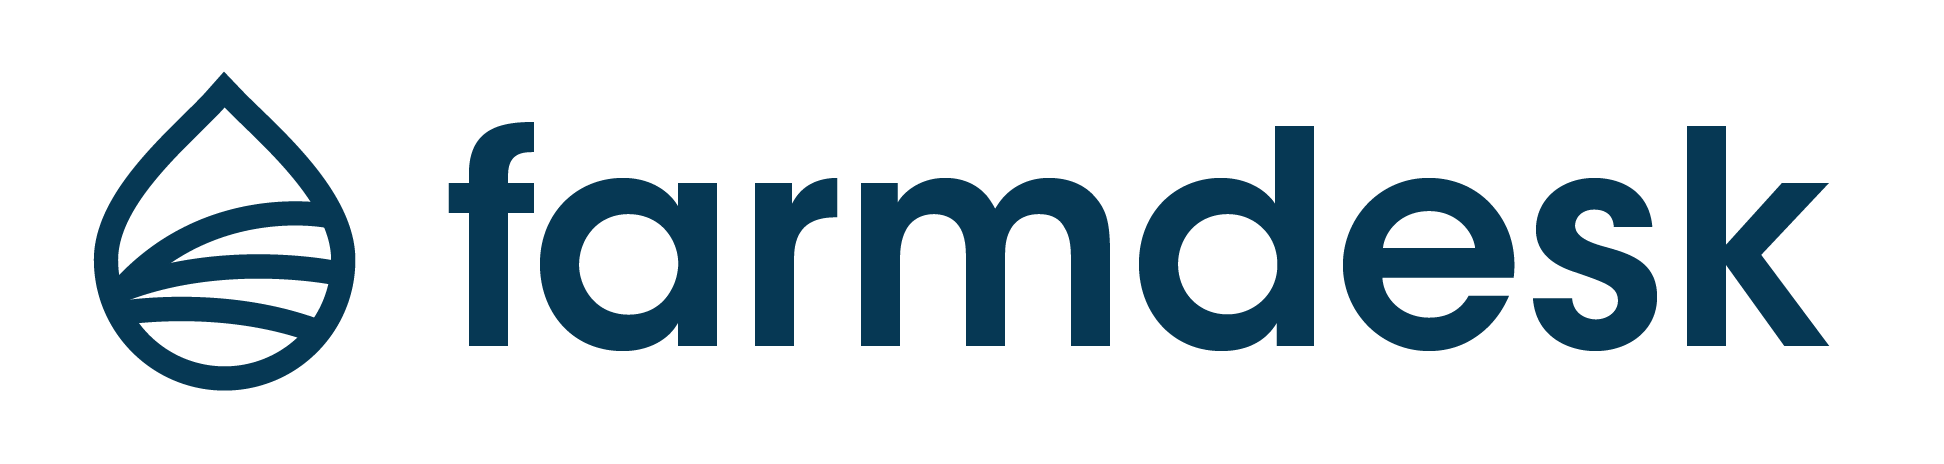 Farmdesk logo